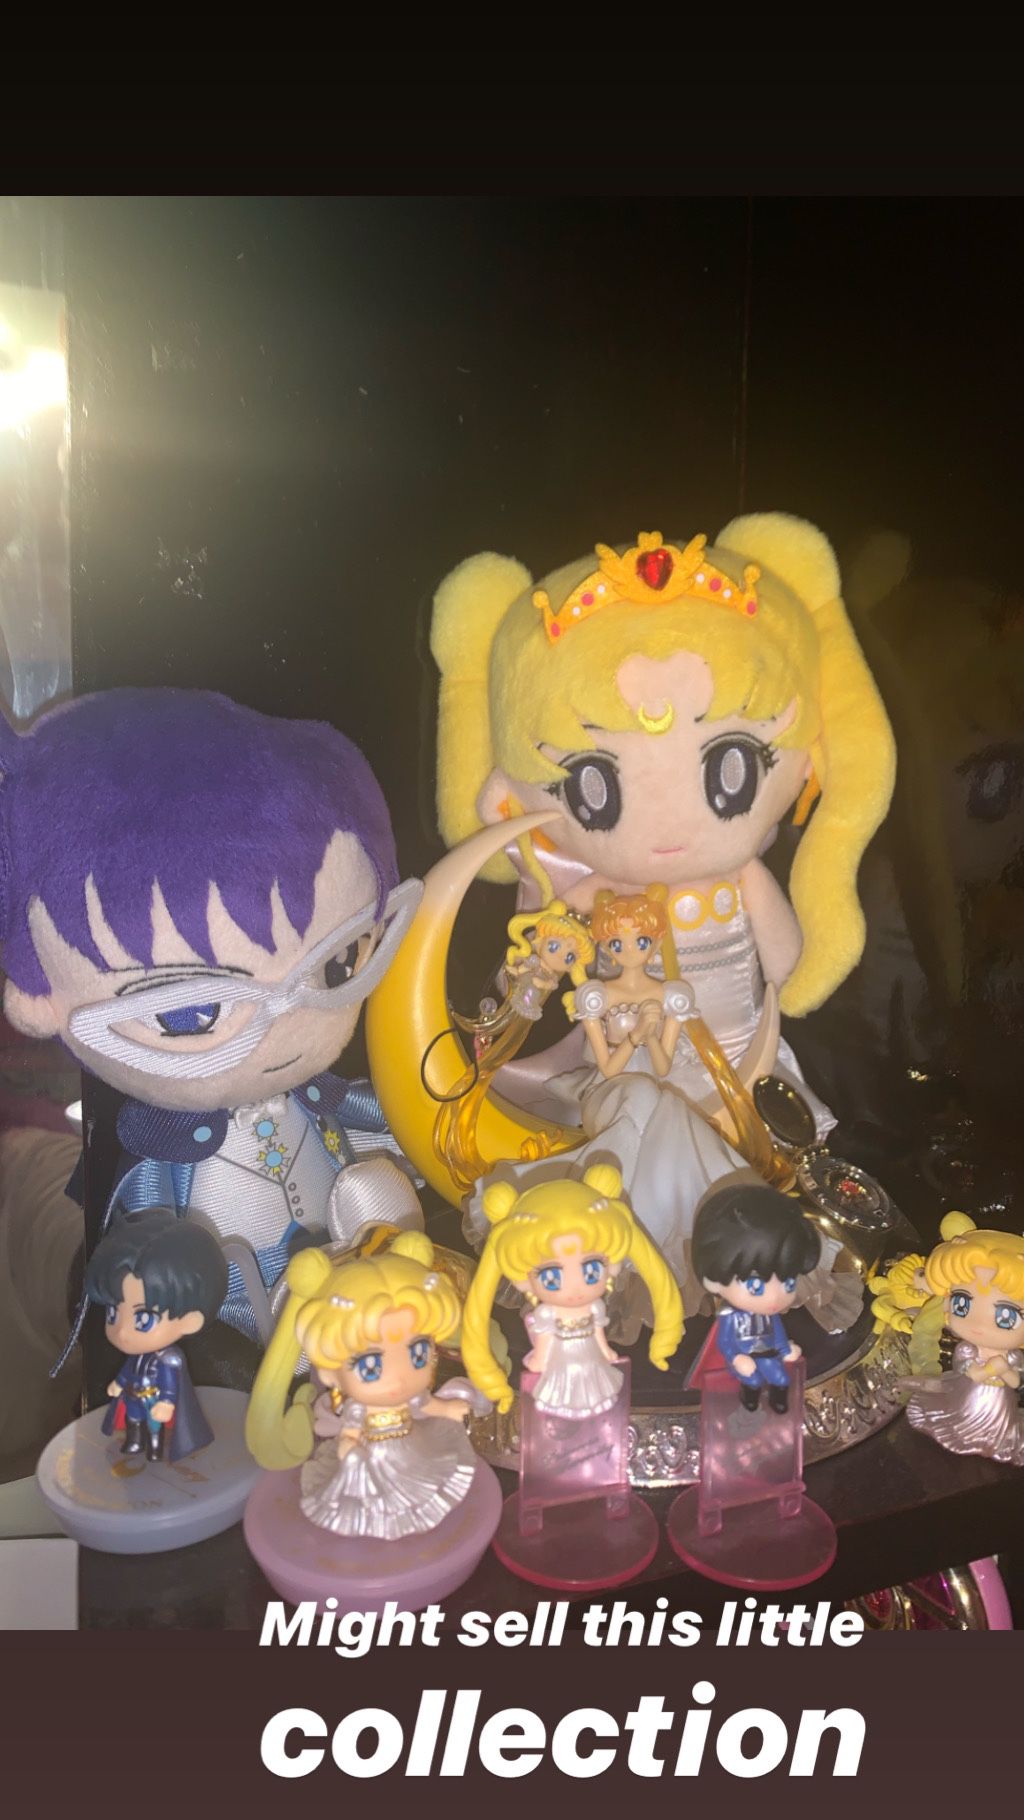 Sailor moon figures and plush